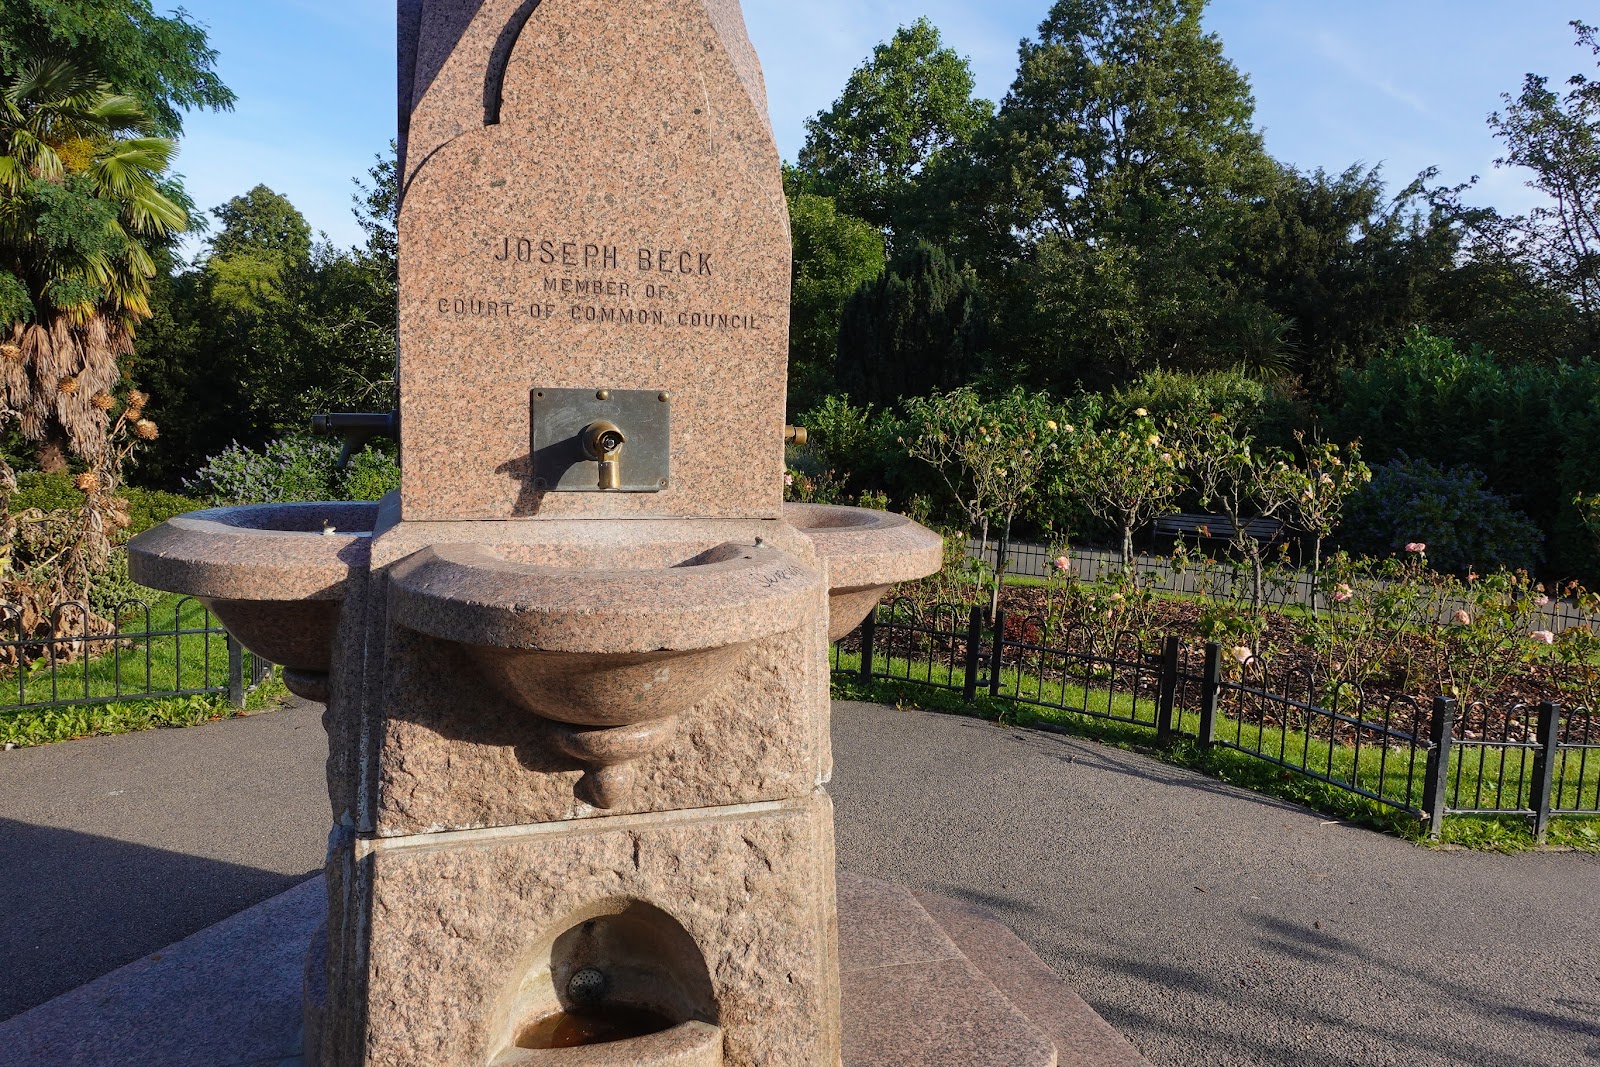 https://whatremovals.co.uk/wp-content/uploads/2022/02/Joseph Beck memorial fountain-300x200.jpeg